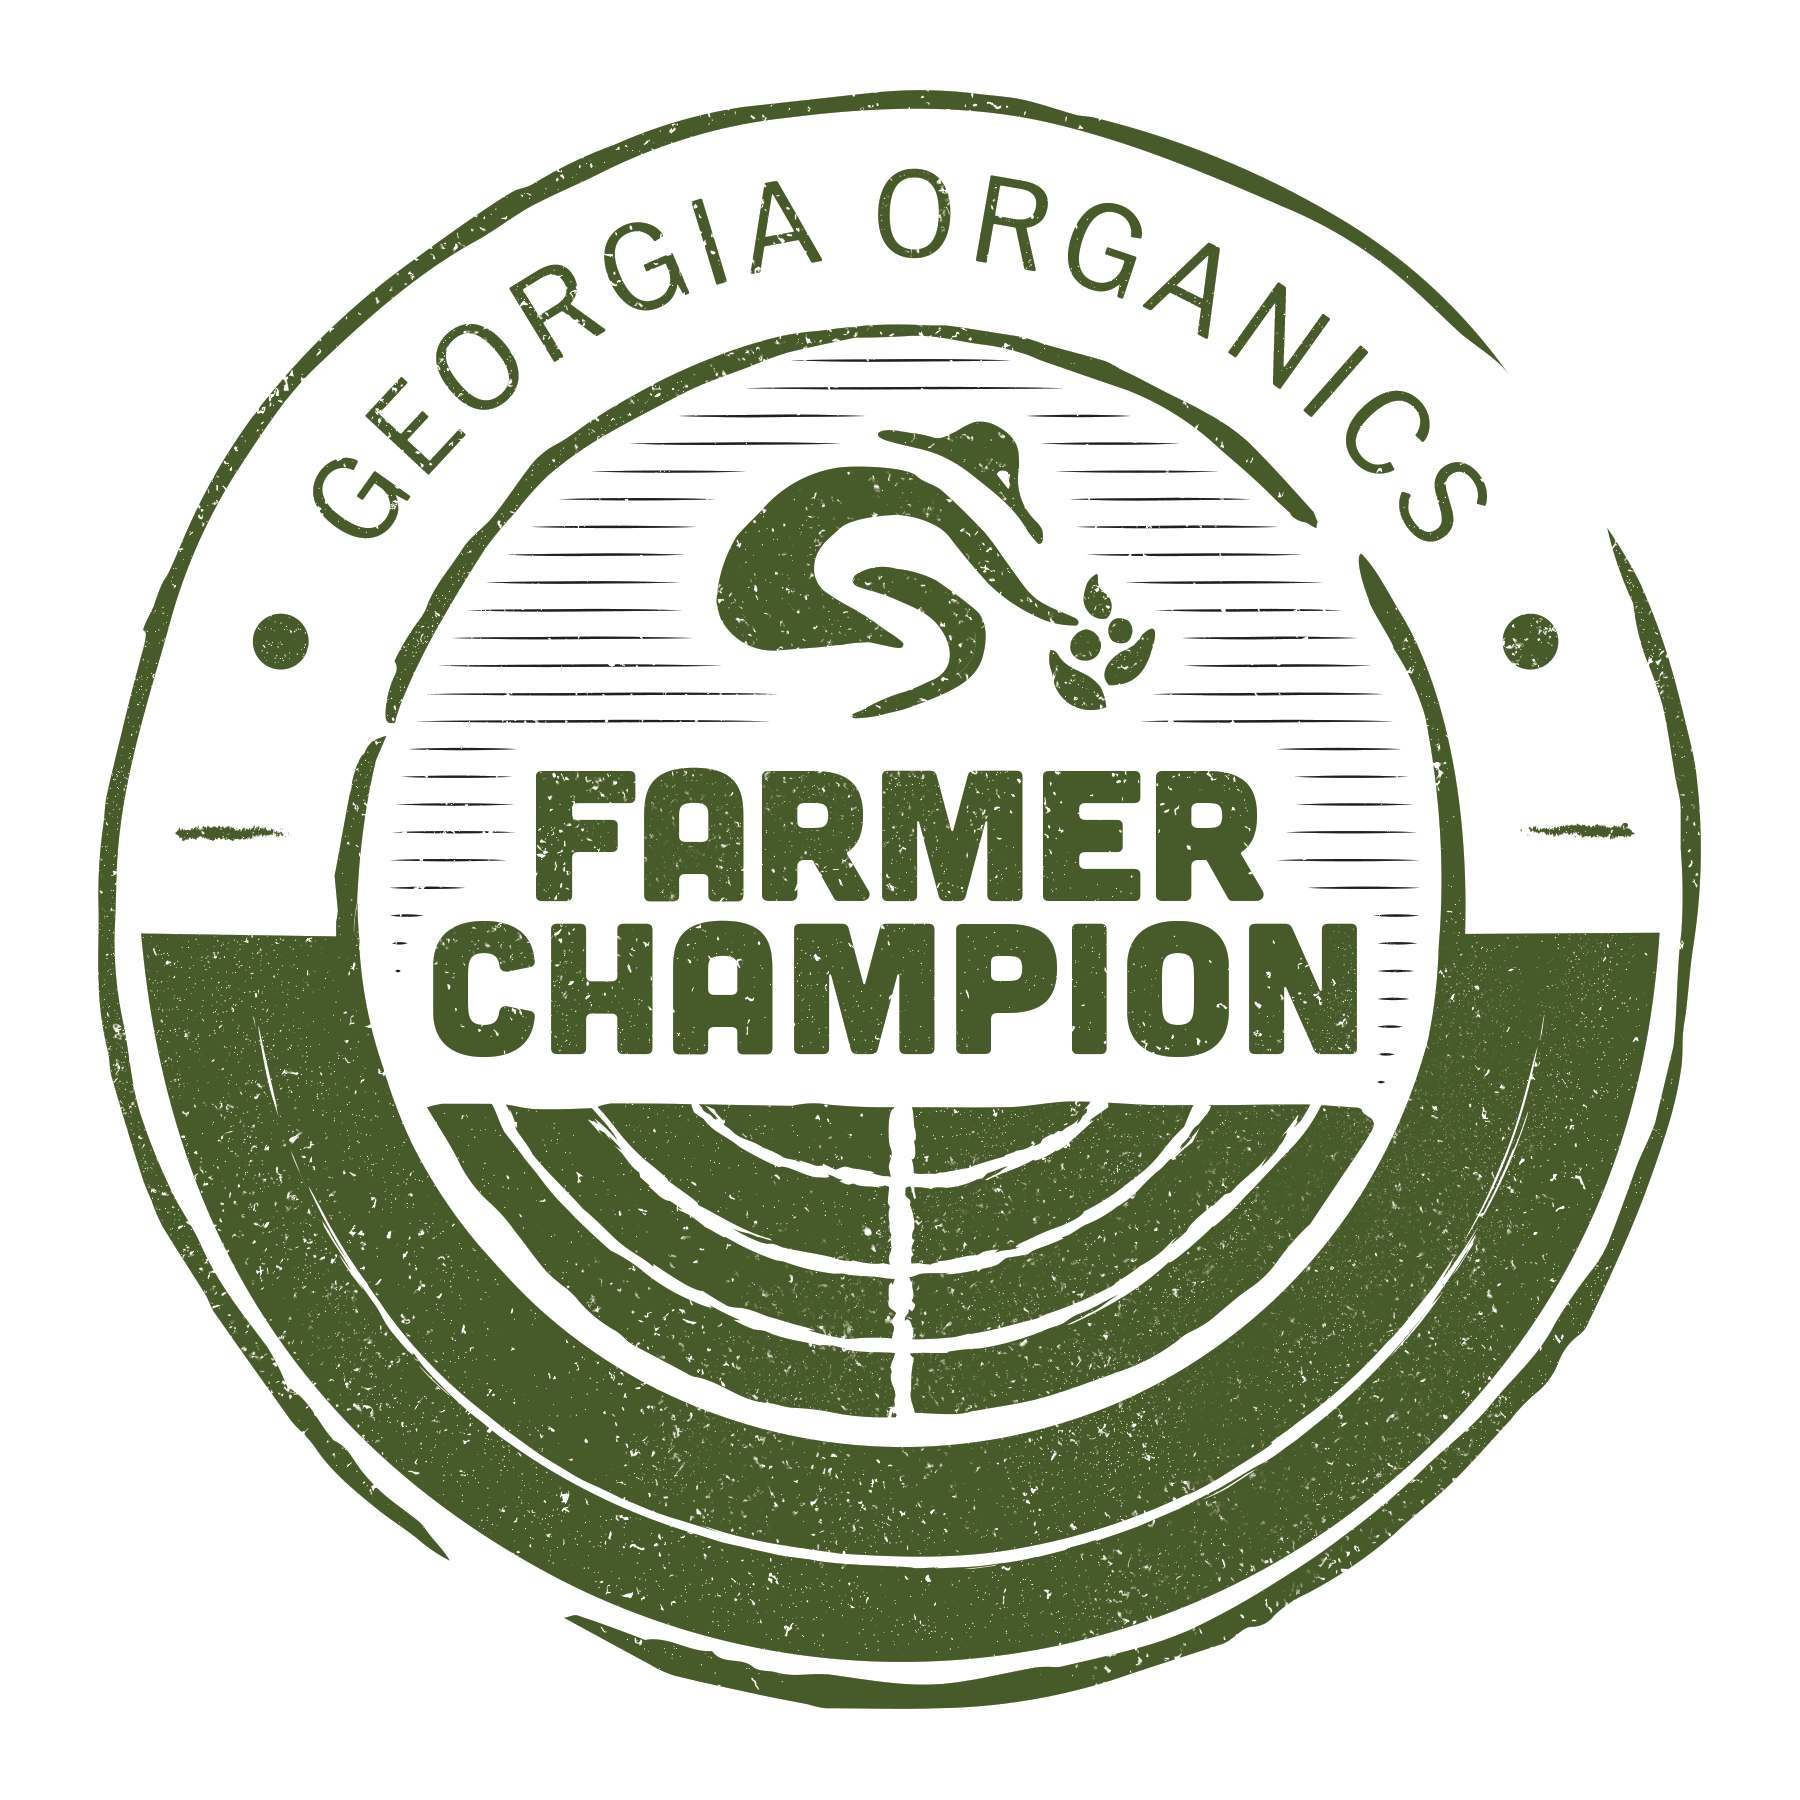 Georgia Organics Farmer Champion logo